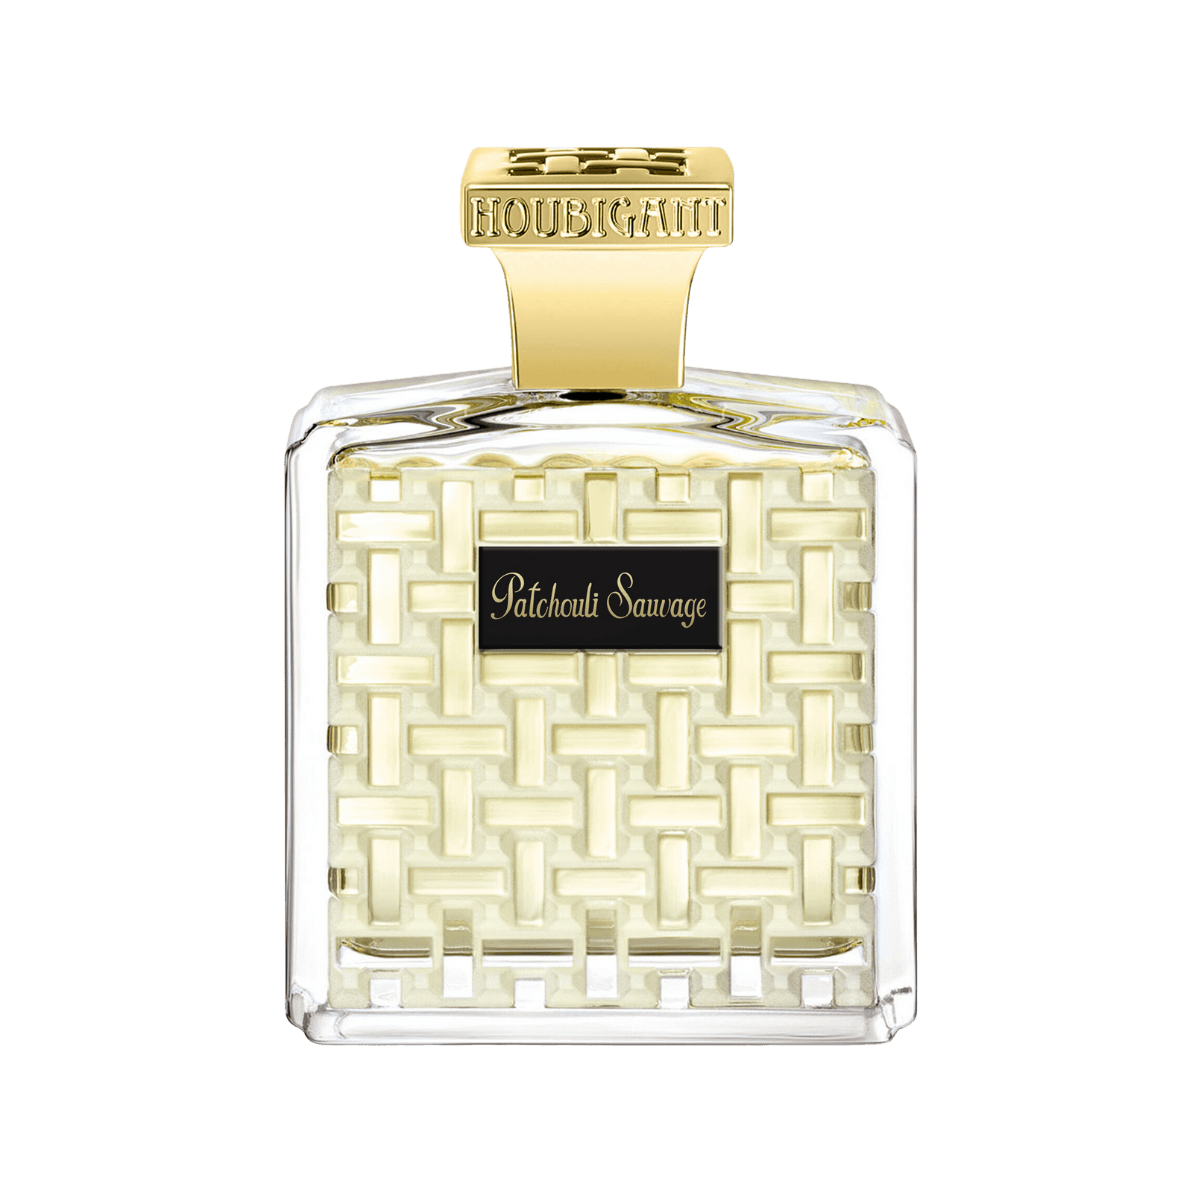 Image of Patchouli Sauvage eau de parfum by the perfume brand Houbigant